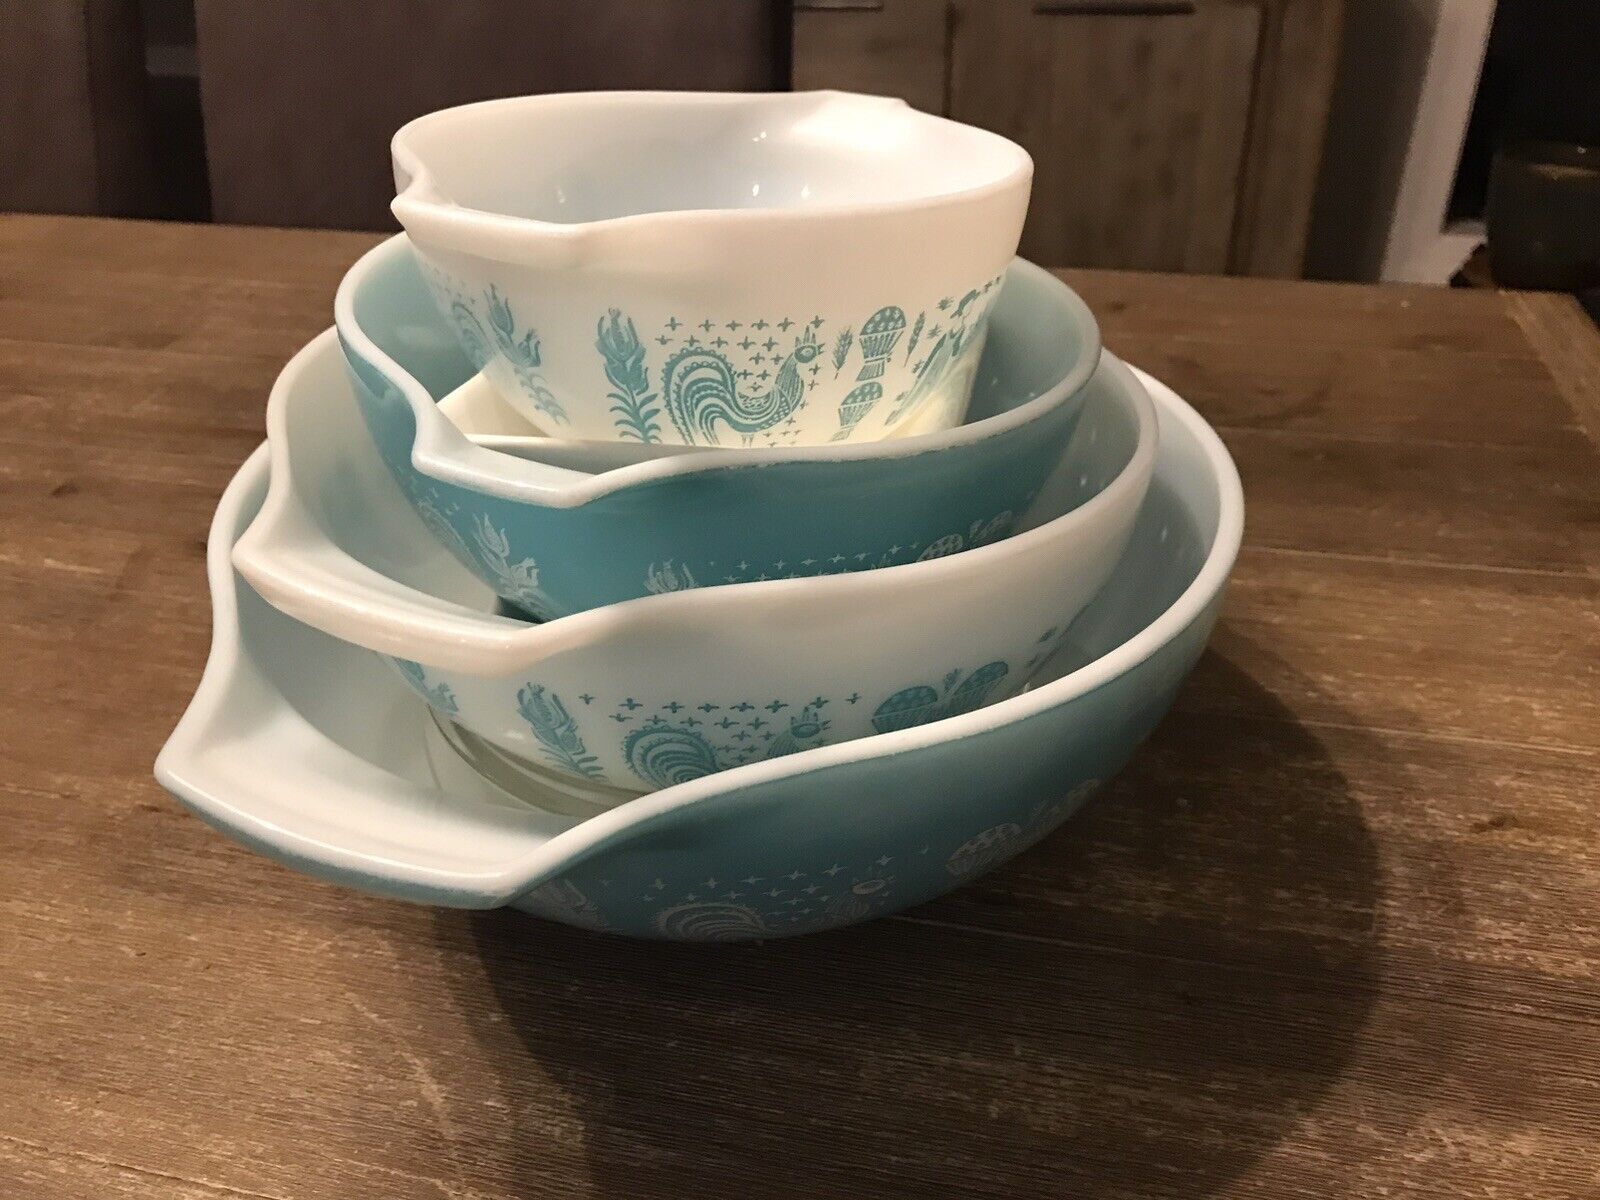 VNTG Pyrex turquoise Butterprint set Cinderella bowls 441 442 443 444 1950s